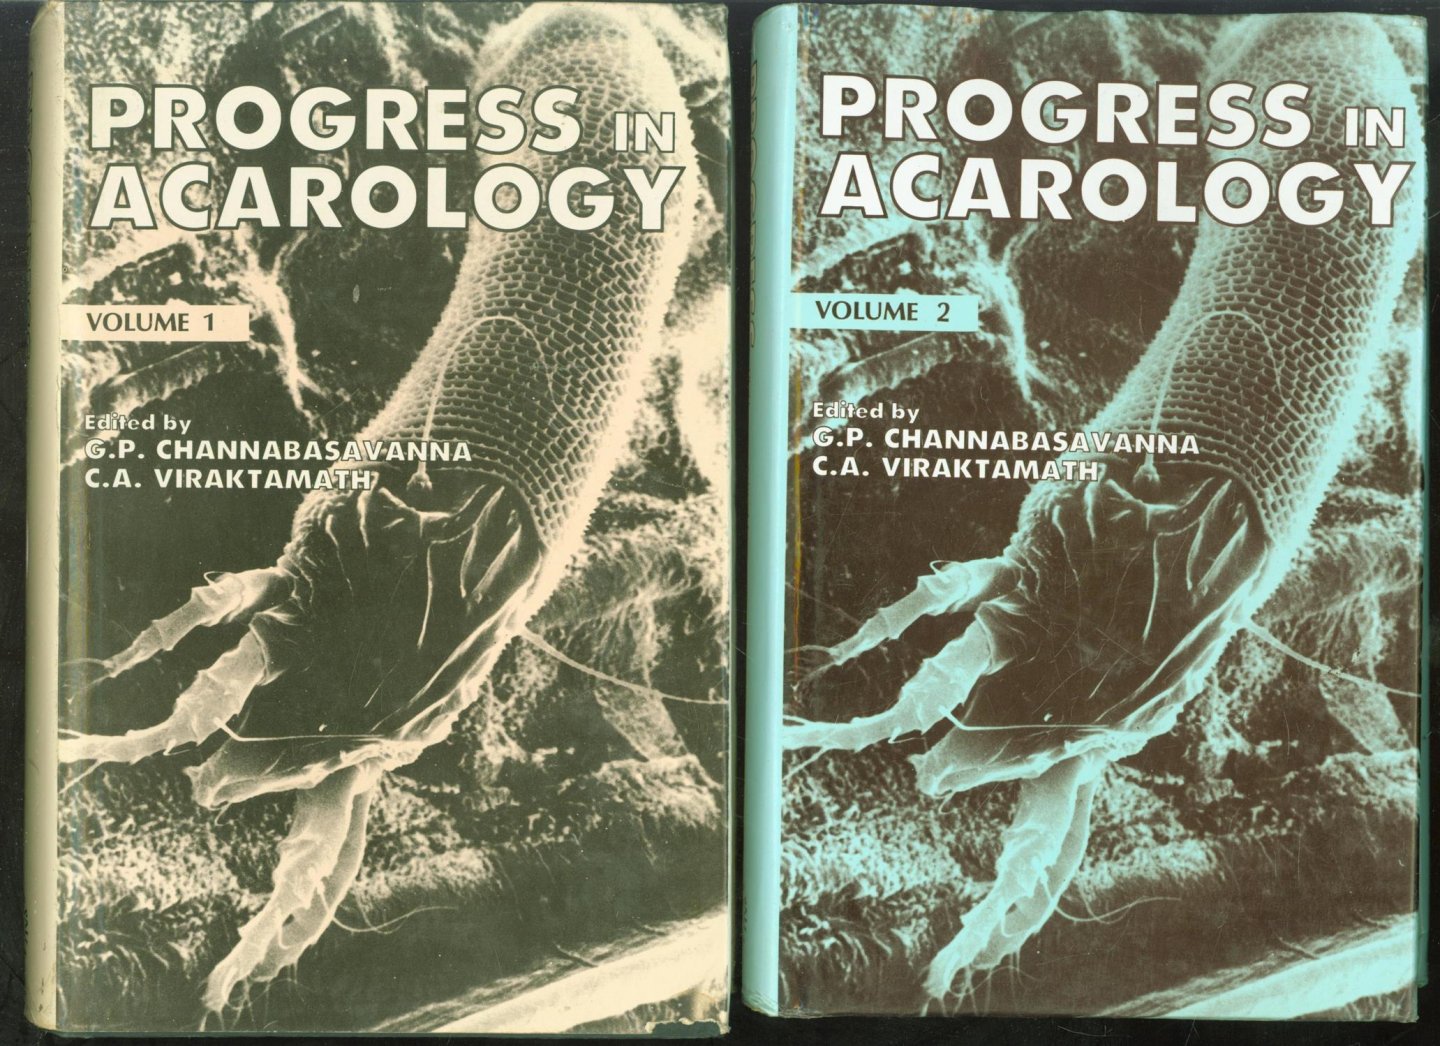 G P Channabasavanna, C A Viraktamath, International Congress of Acarology (7th : 1986 : Bangalore, India) - Progress in acarology ( vol I + II )